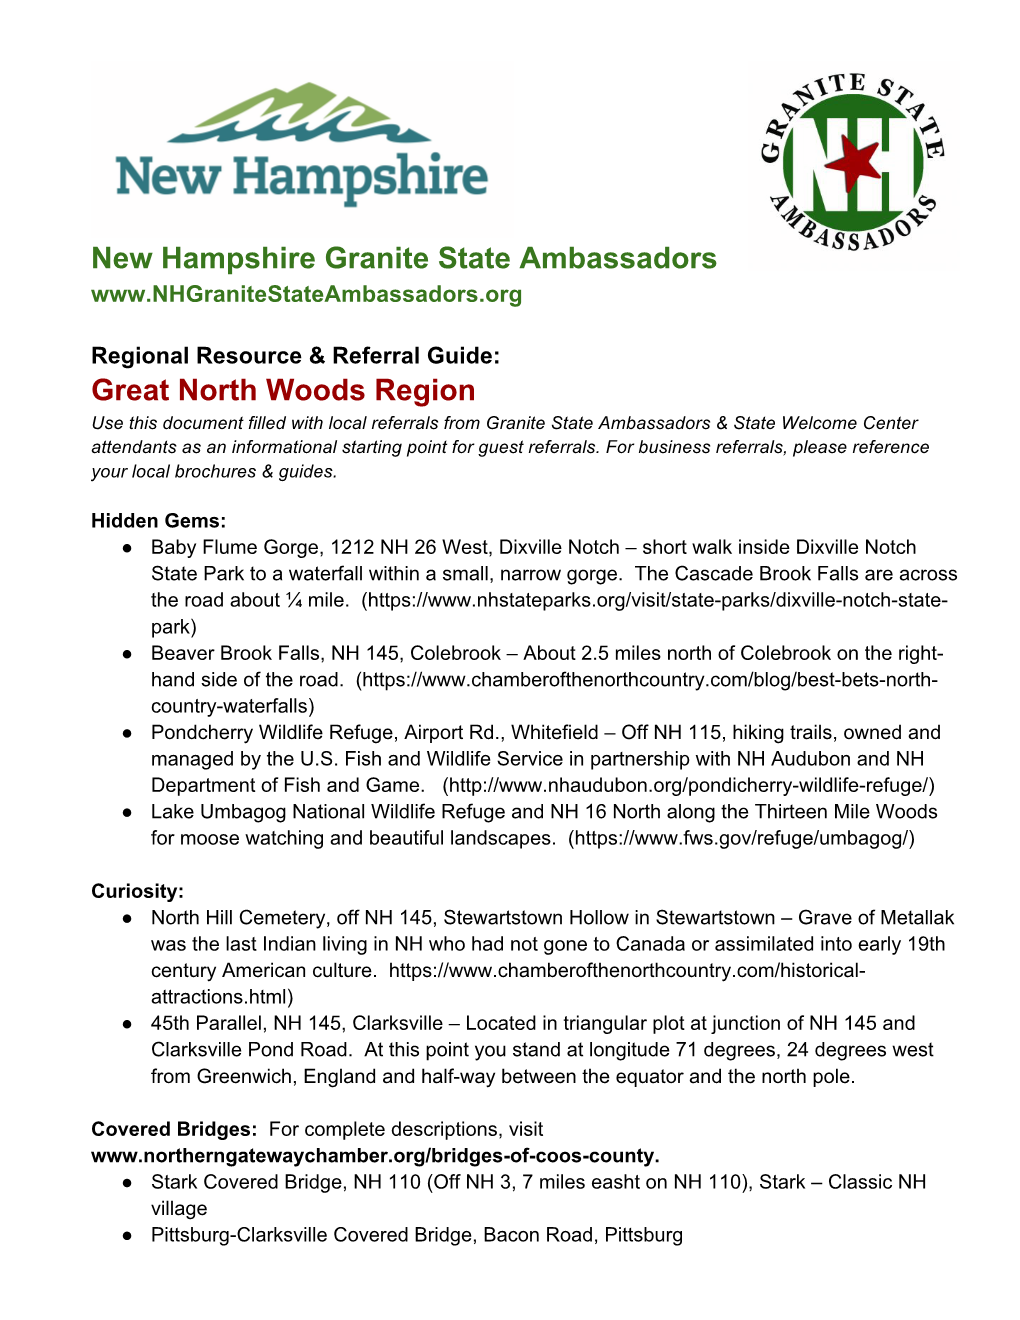 New Hampshire Granite State Ambassadors Great North Woods